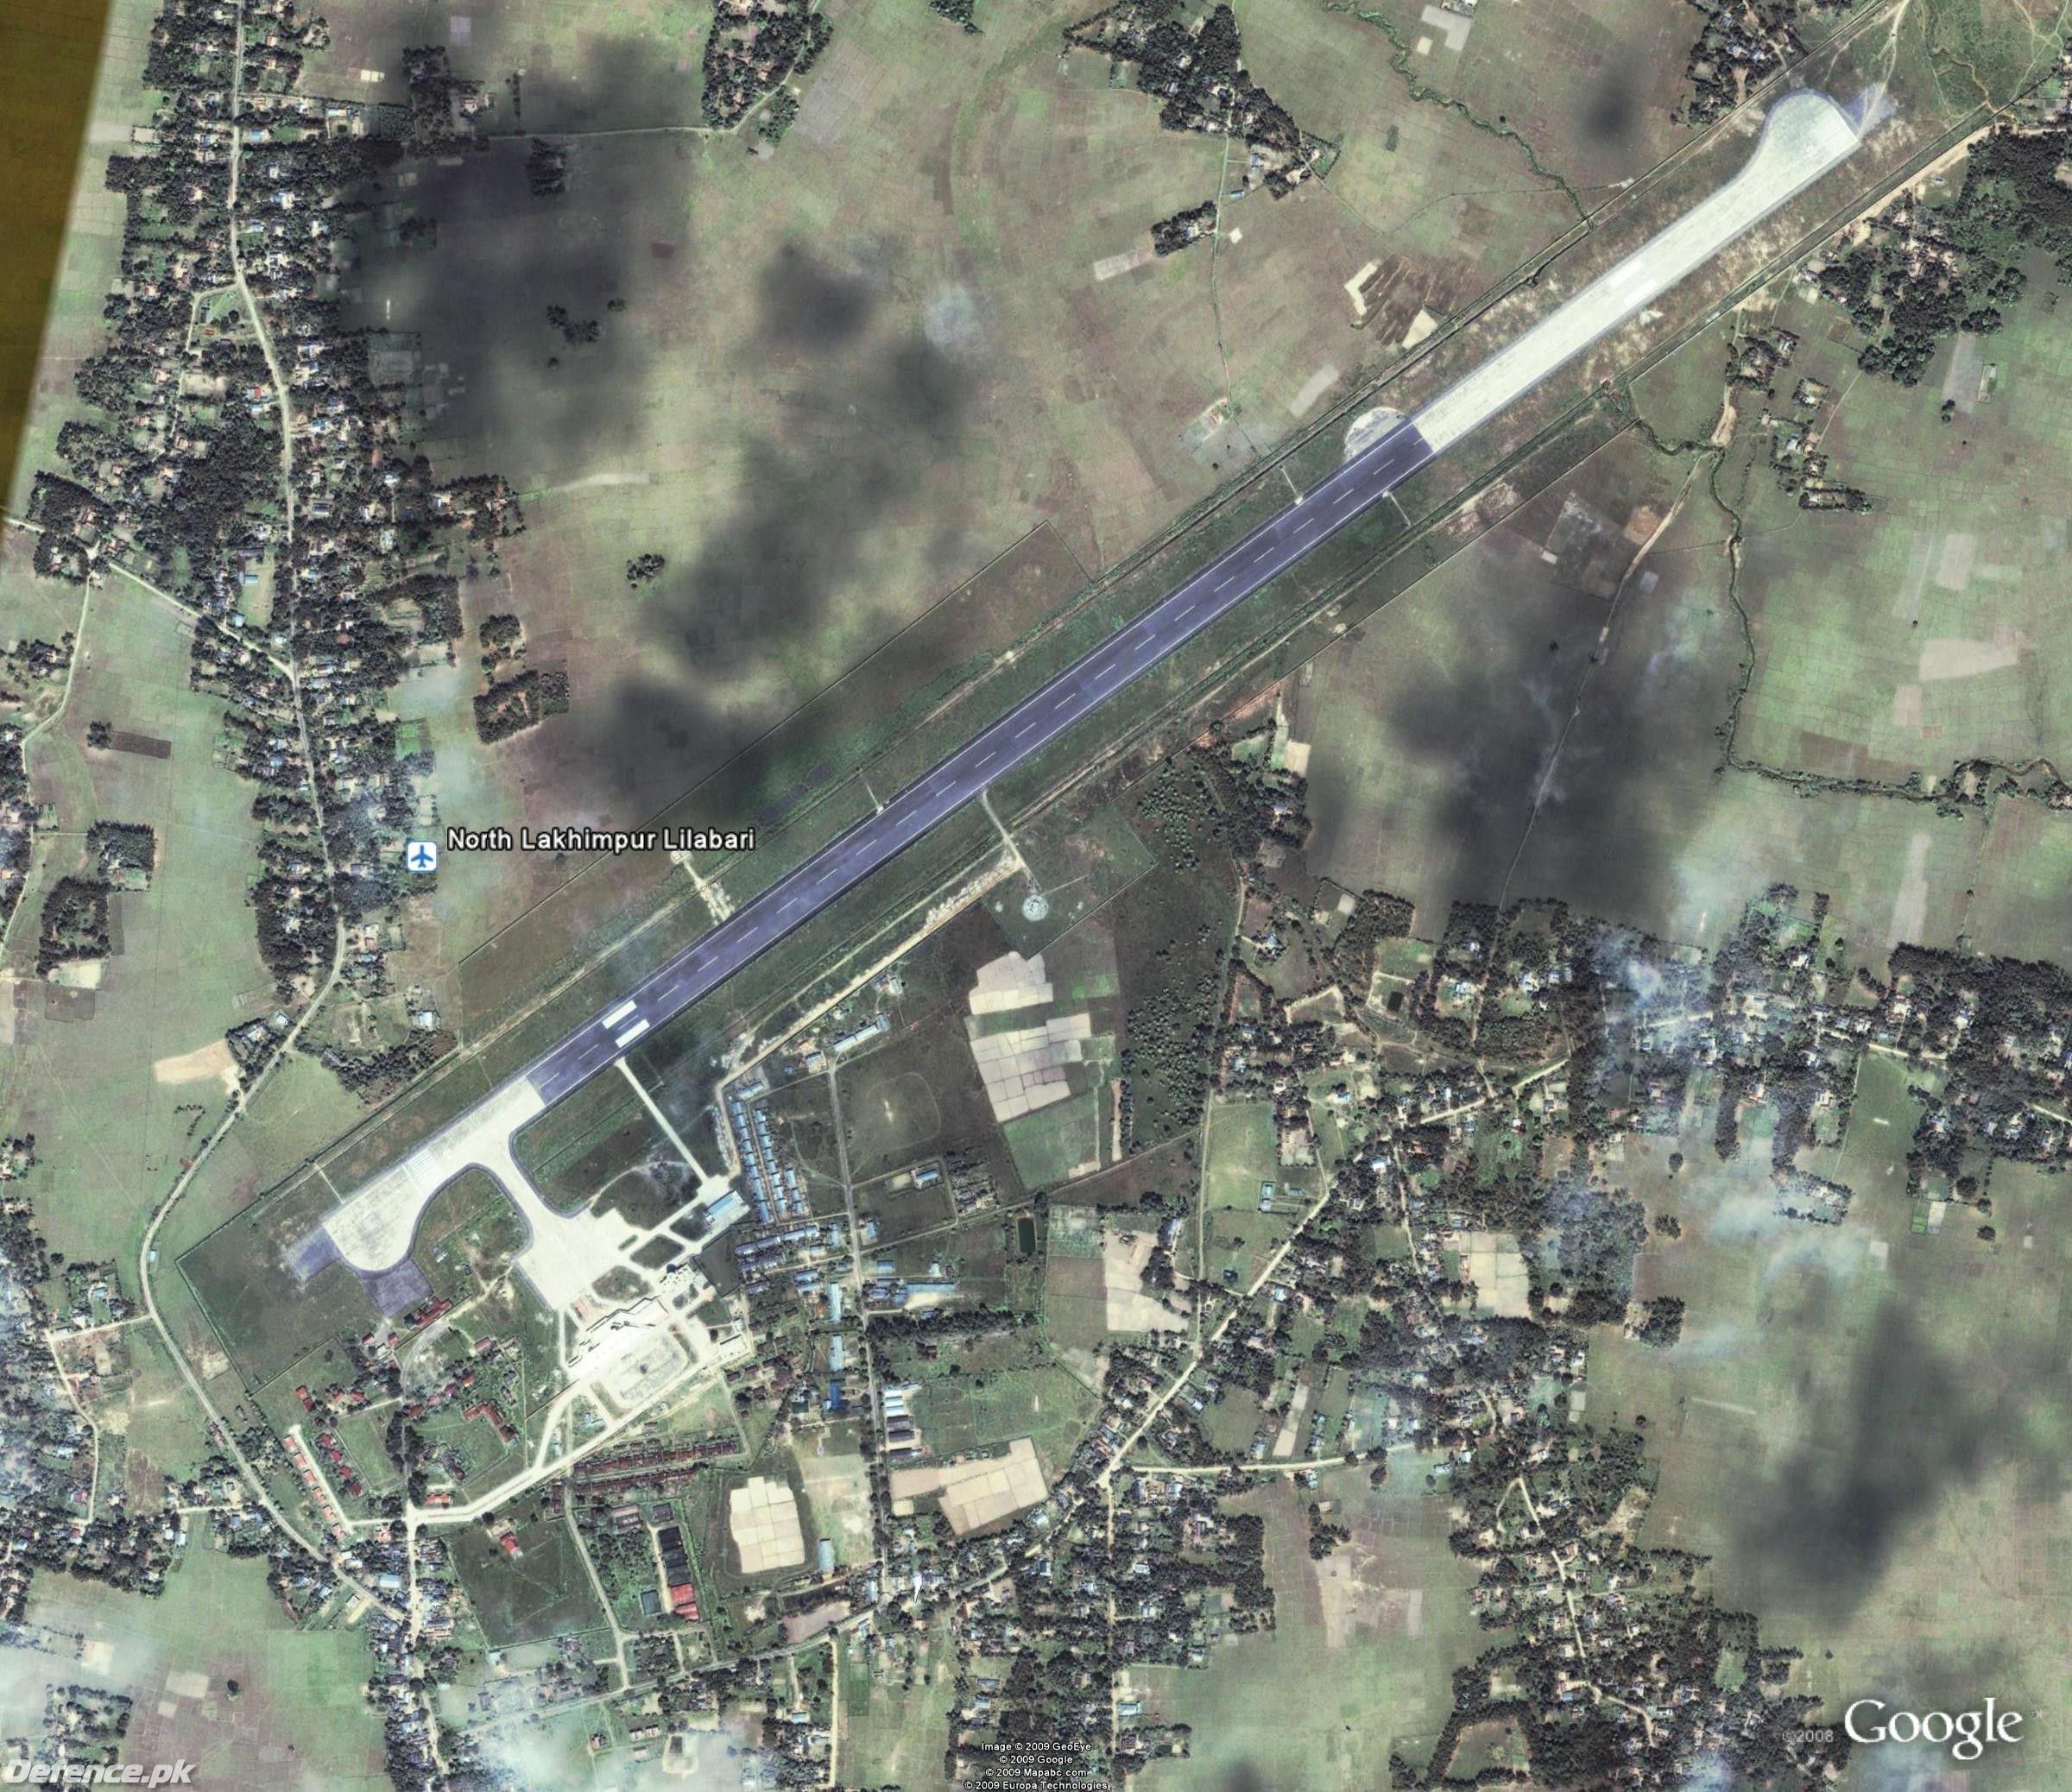 LIlabari Airport Assam